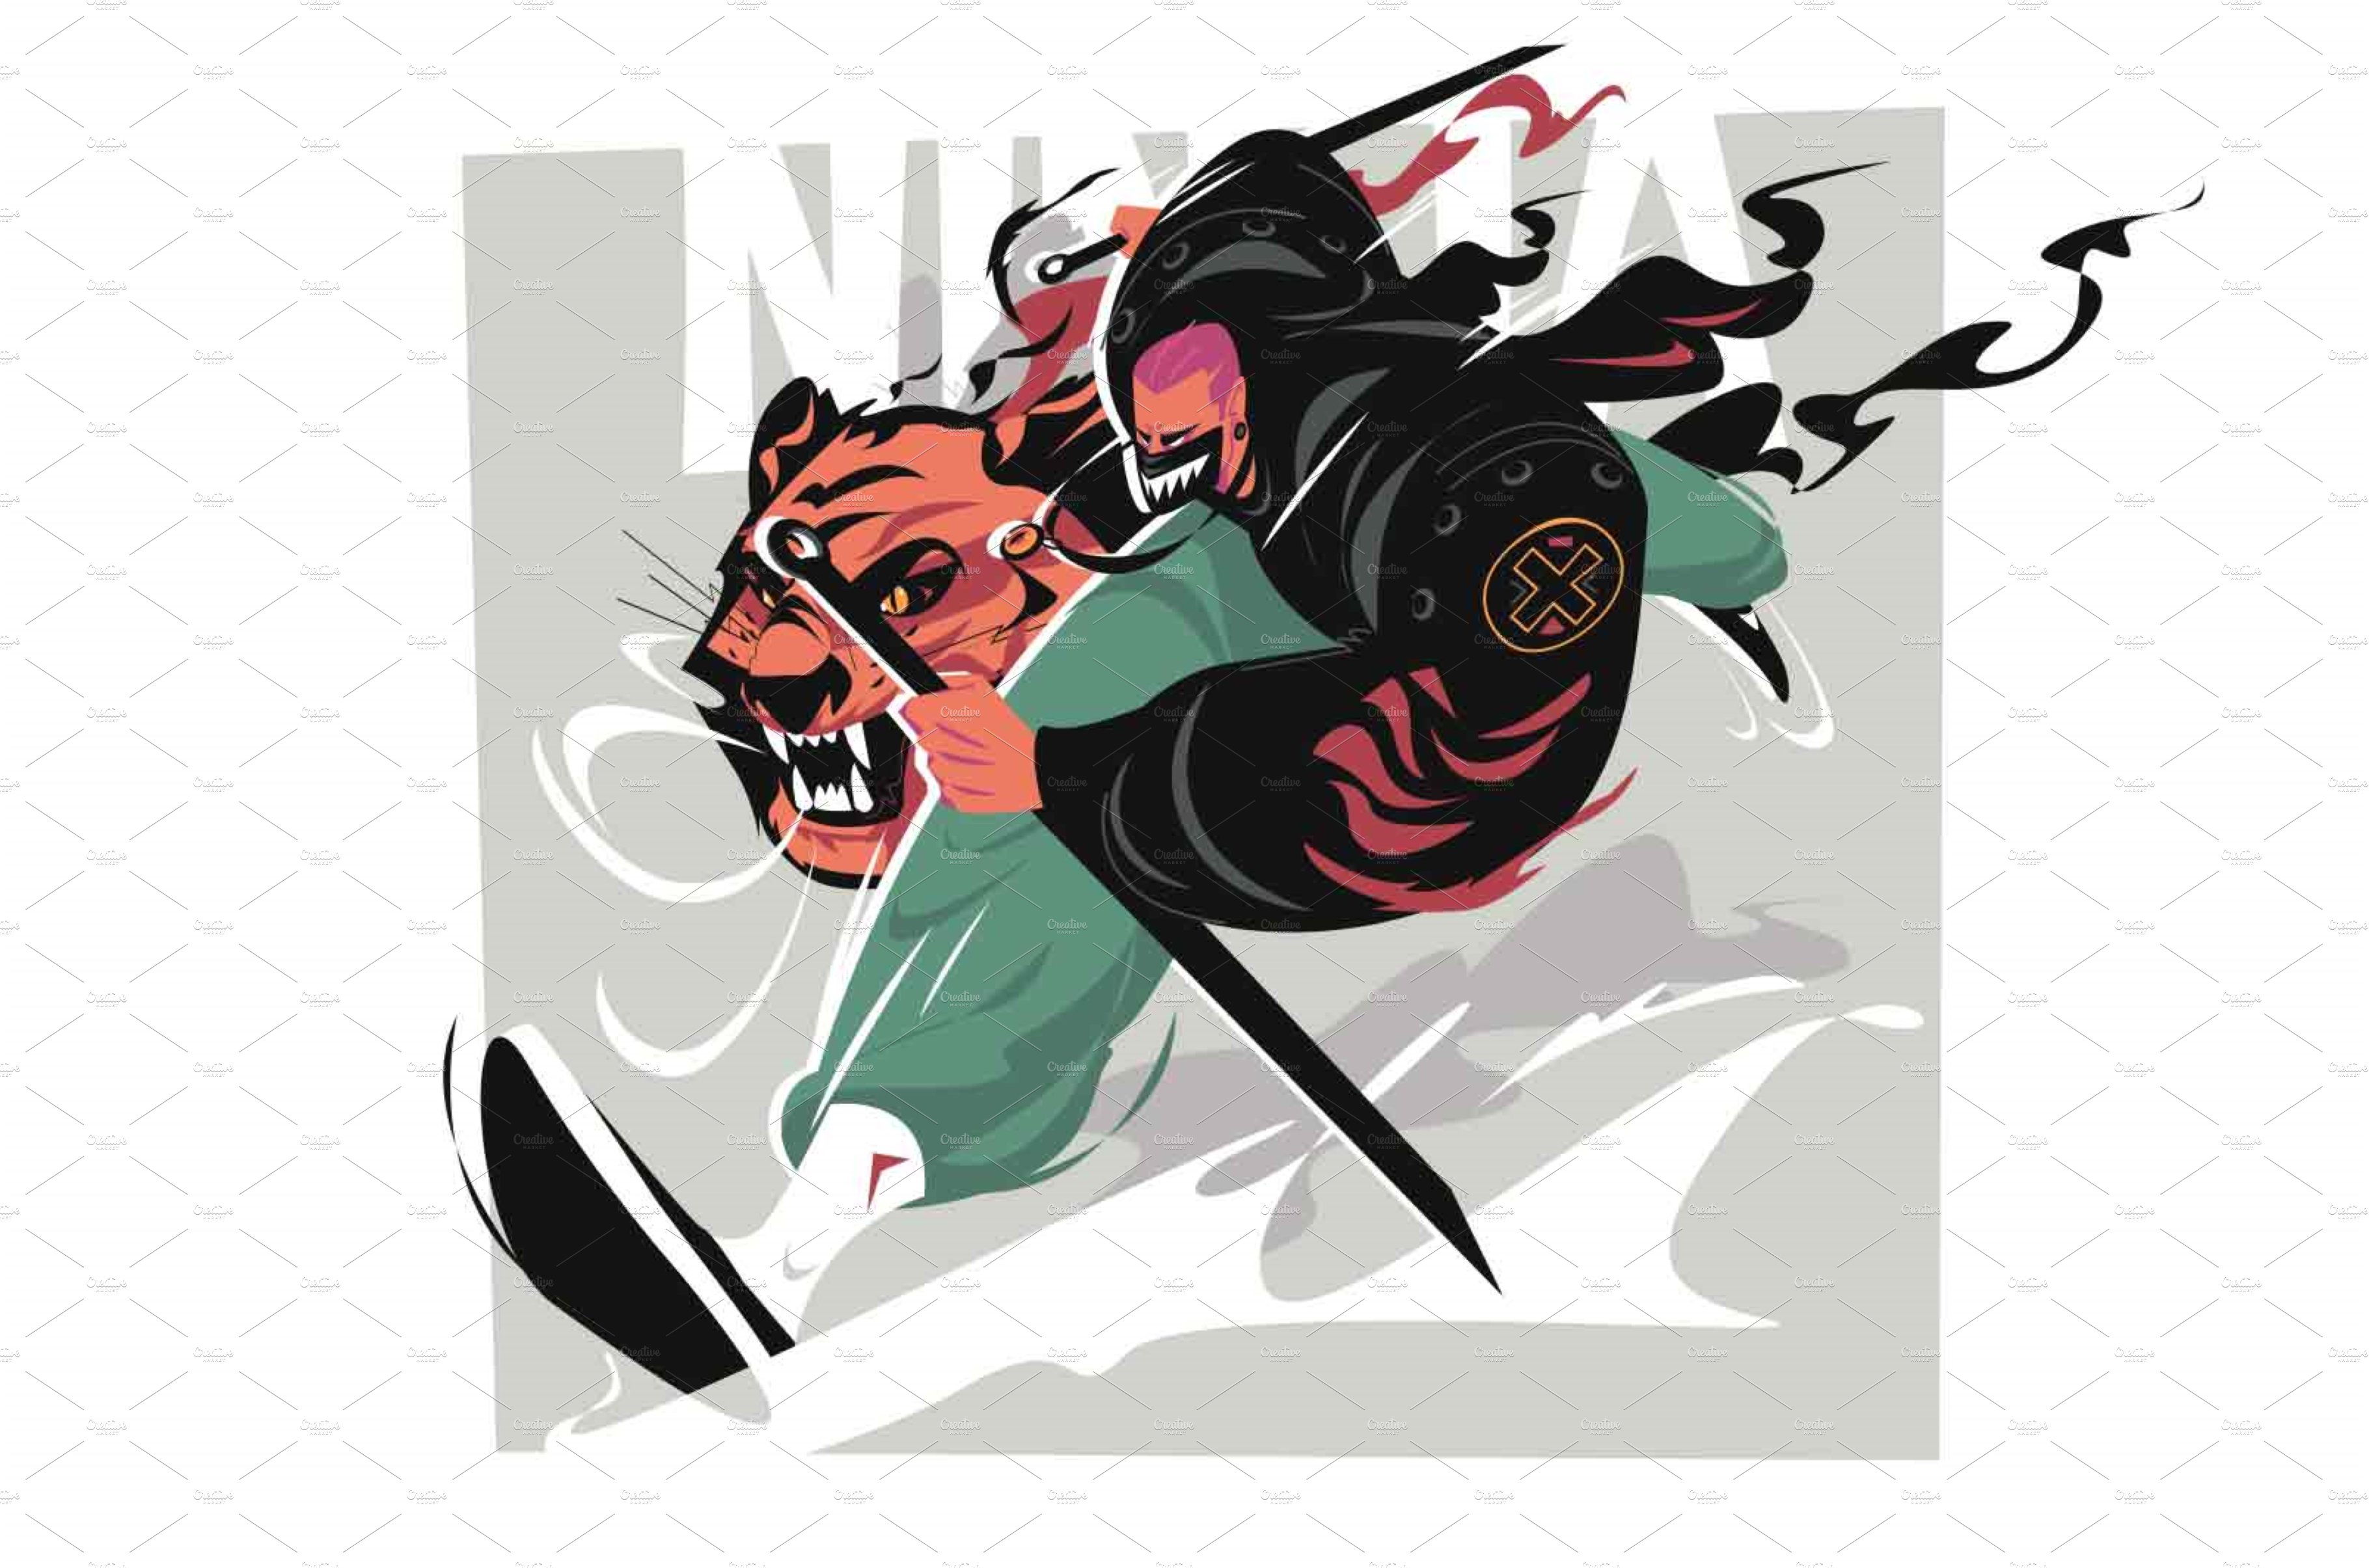 Samurai flying into battle cover image.